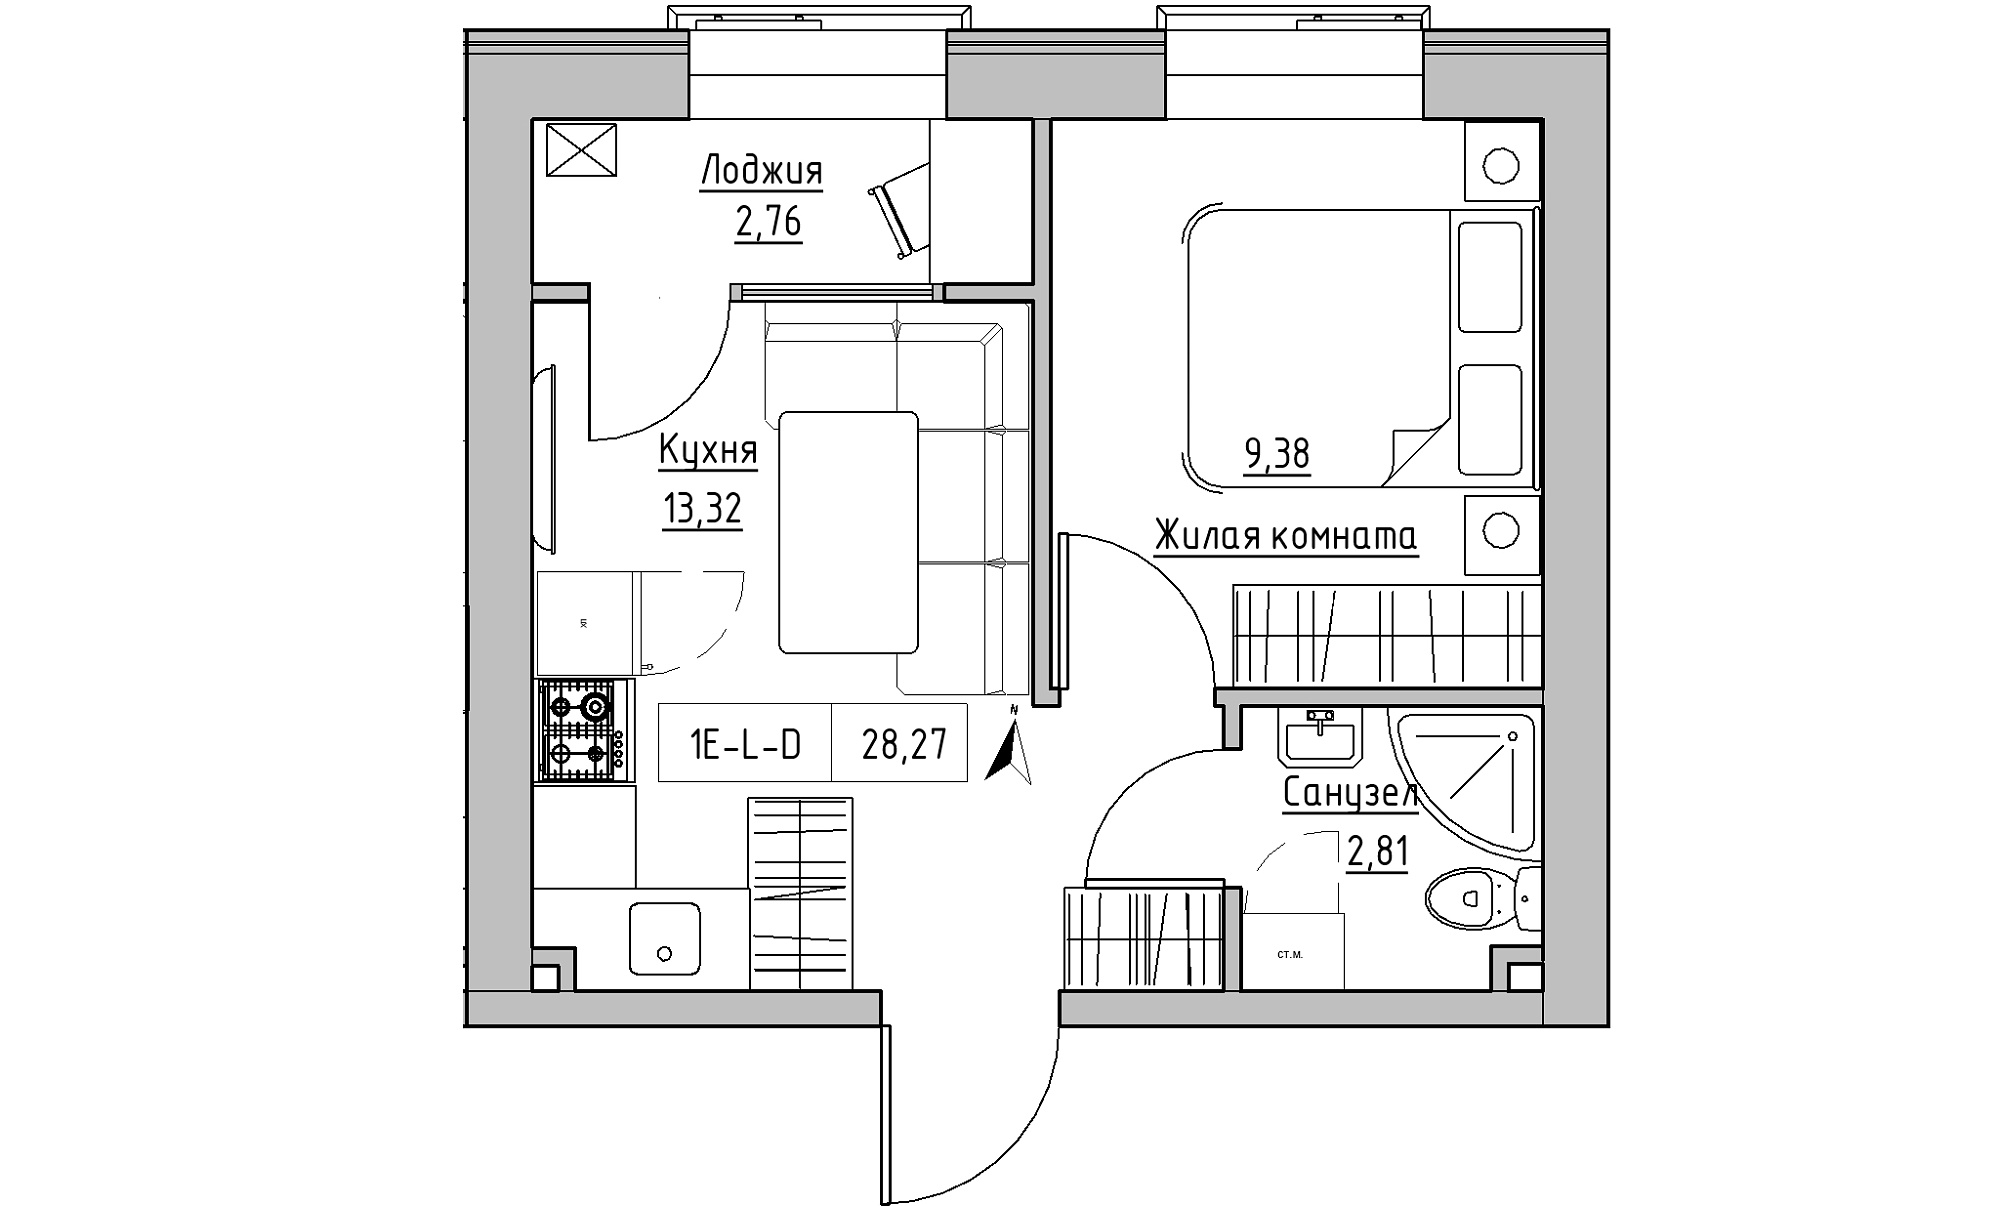 Planning 1-rm flats area 28.27m2, KS-023-05/0018.